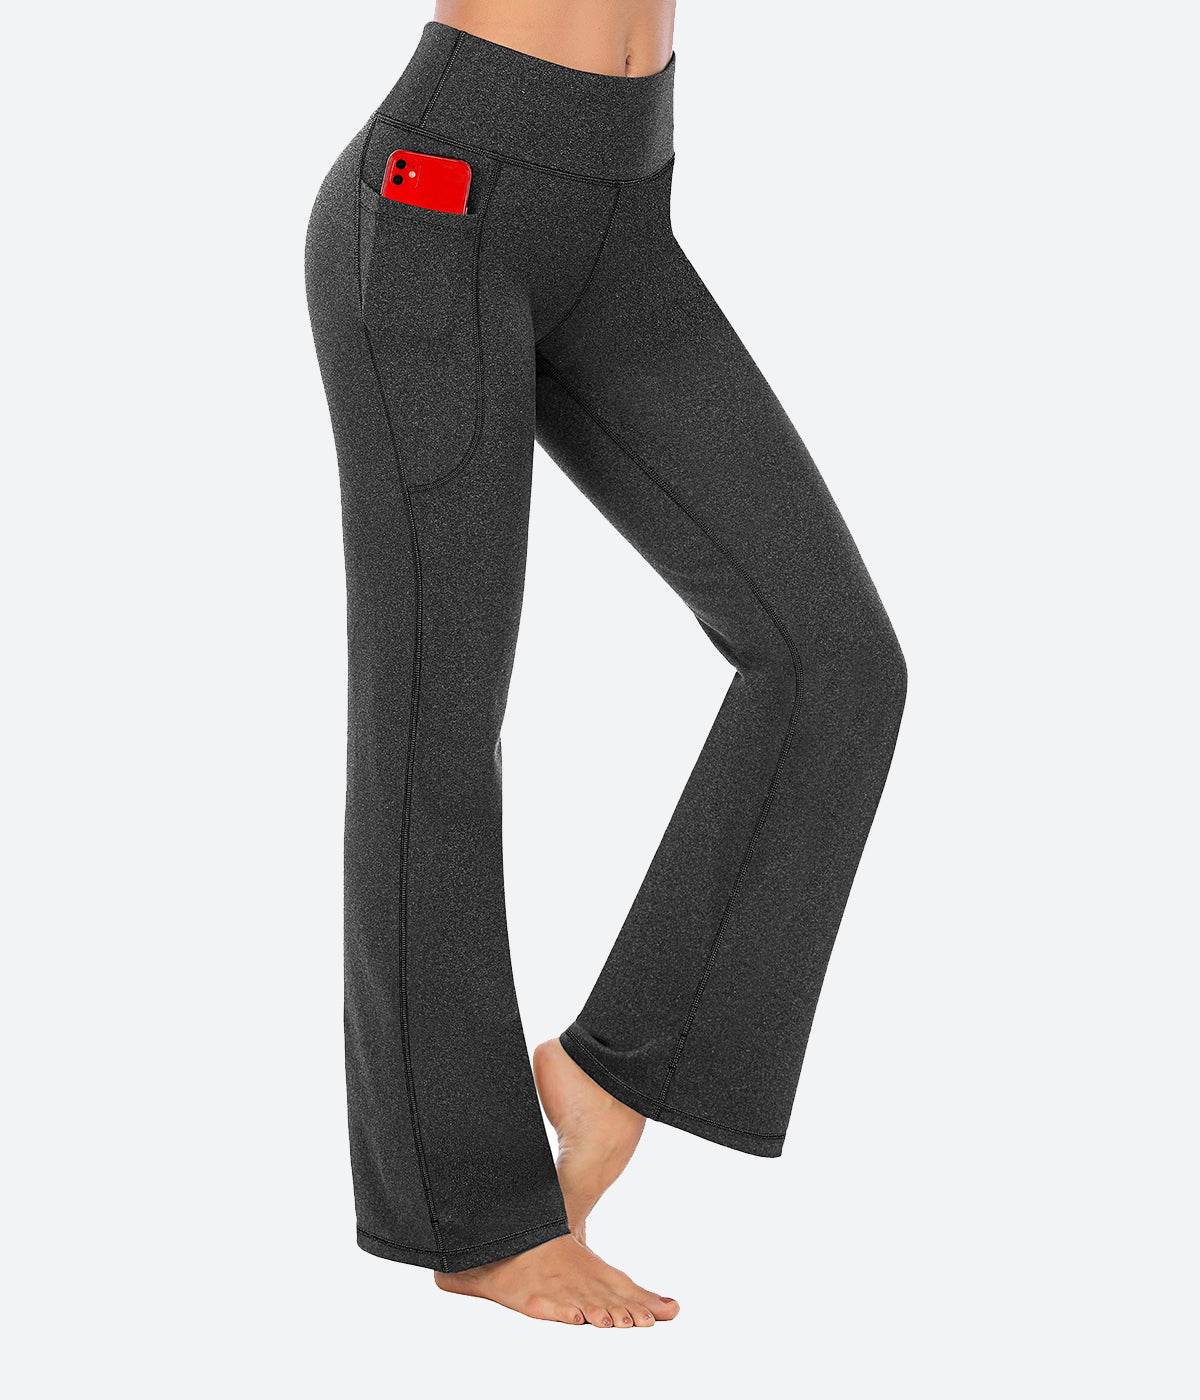 IUGA Bootcut Yoga Pants for Women with Pockets High Ghana